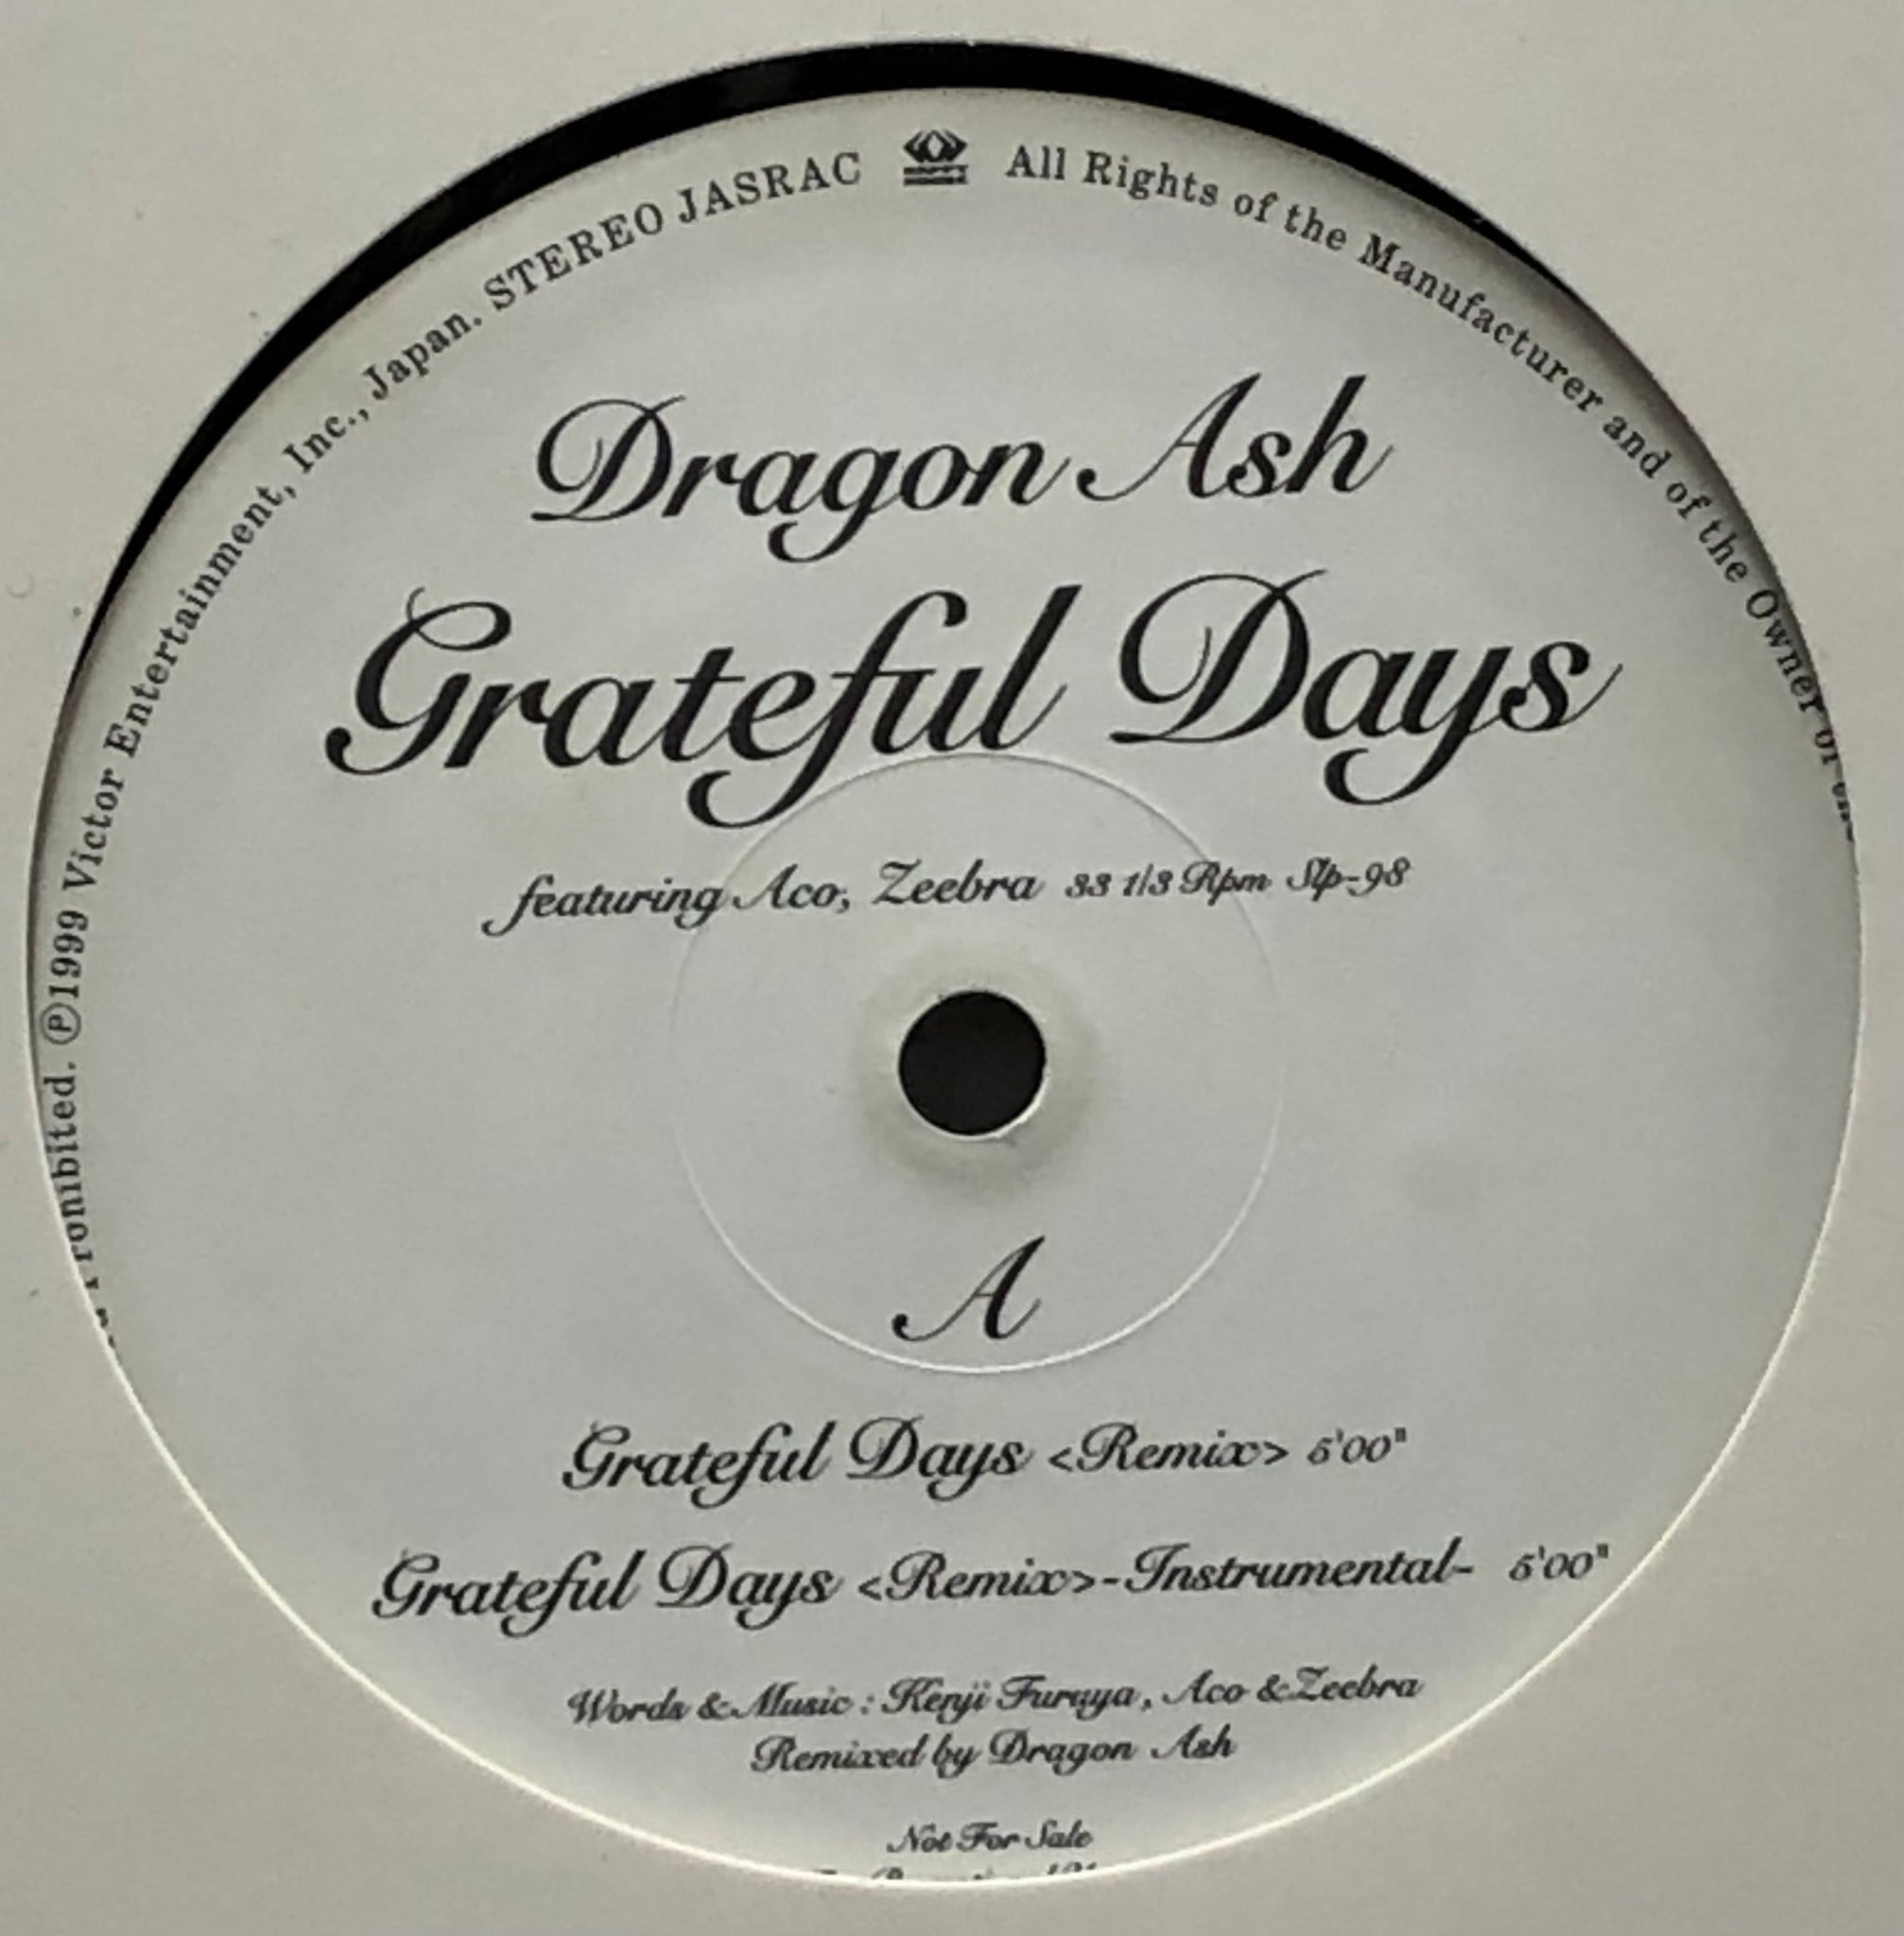 Dragon Ash Grateful Days アナログレコード - yanbunh.com